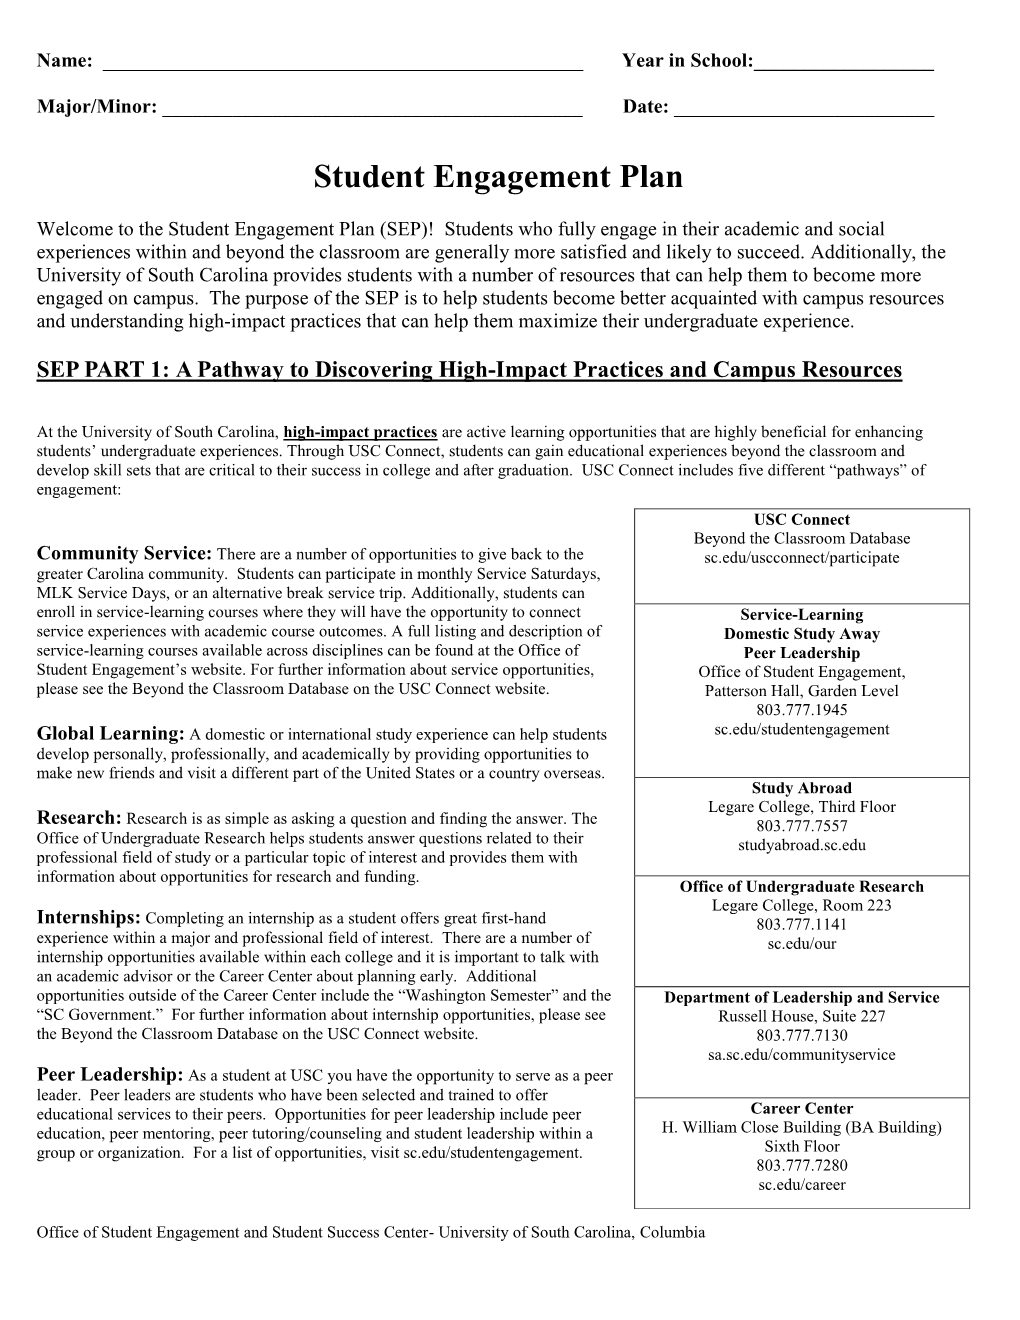 Student Engagement Plan